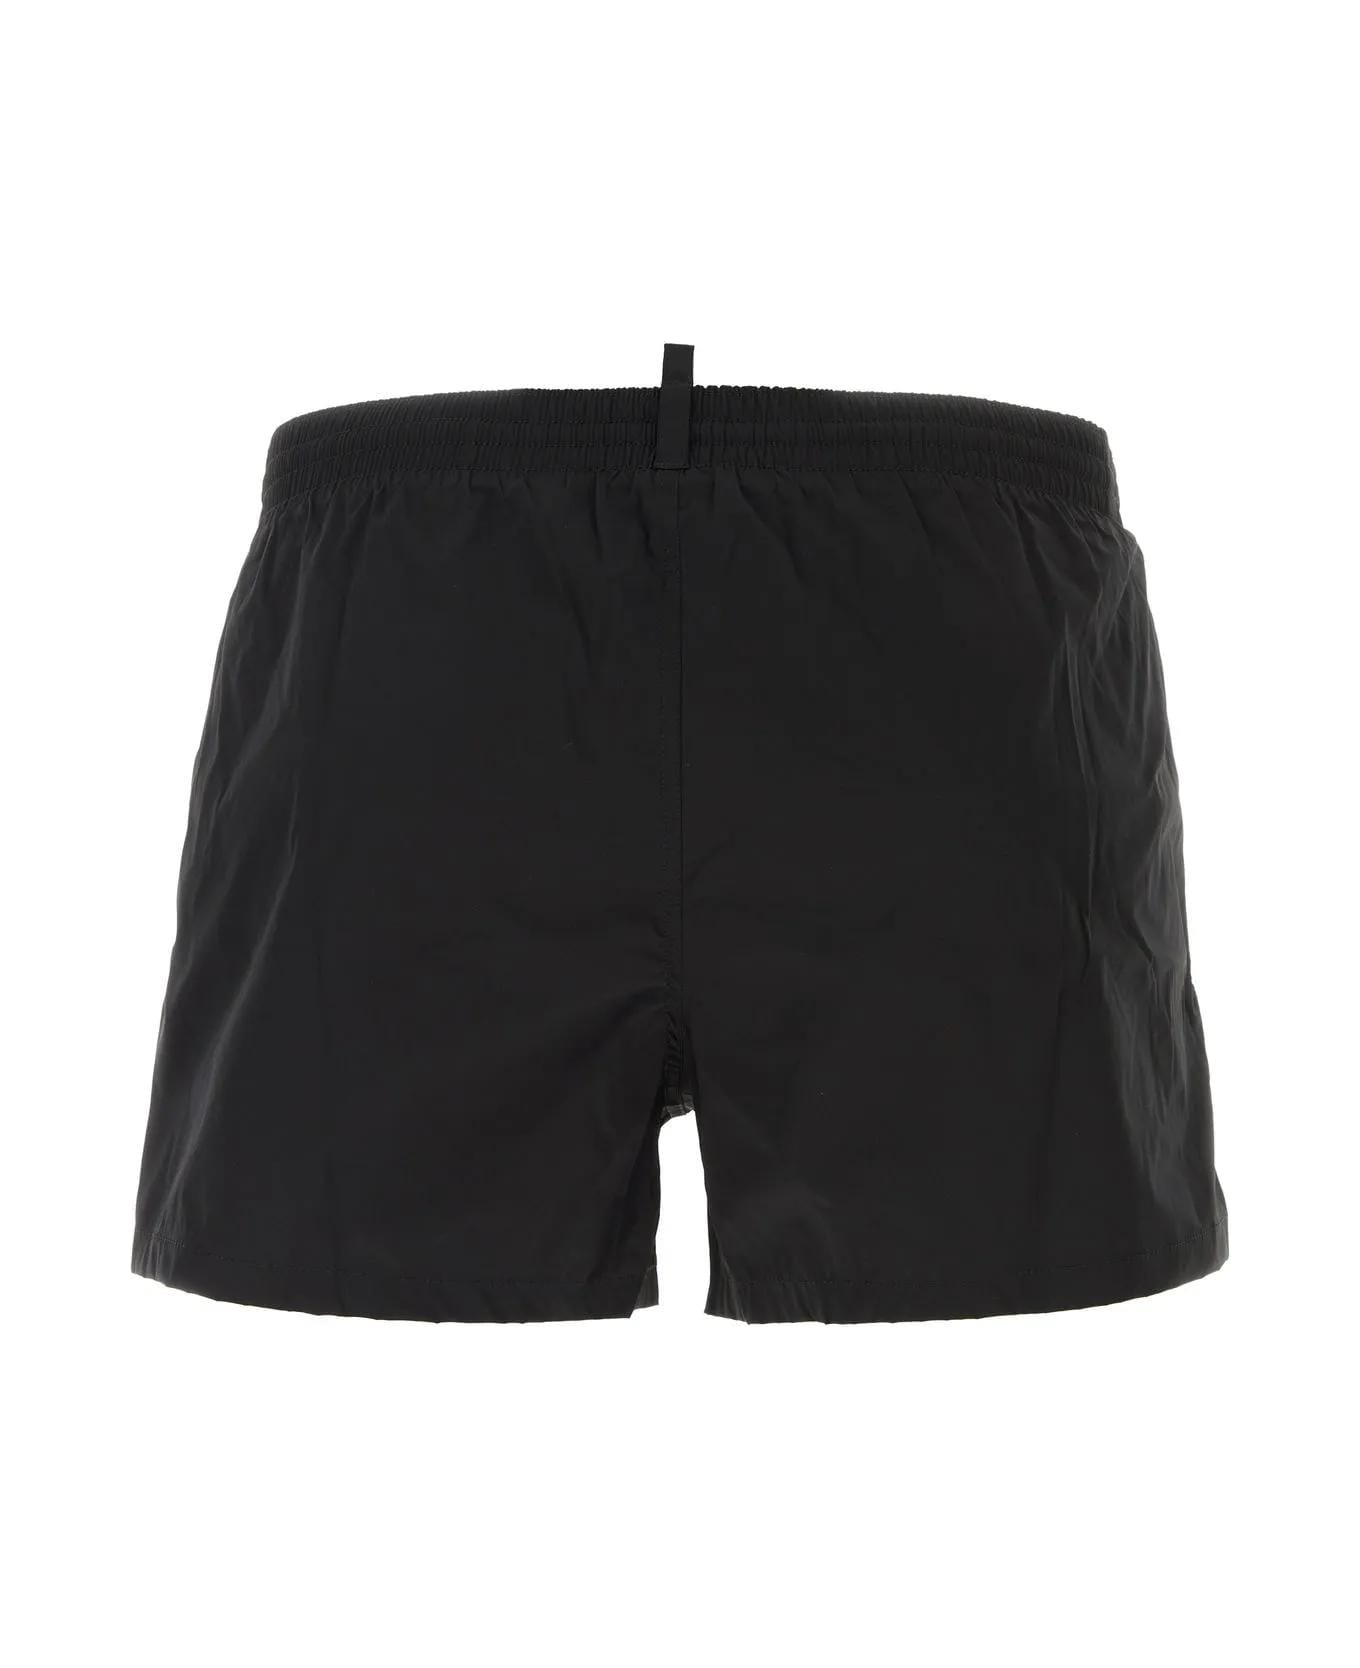 Dsquared2 Black Stretch Nylon Swimming Shorts - Black Red ショートパンツ